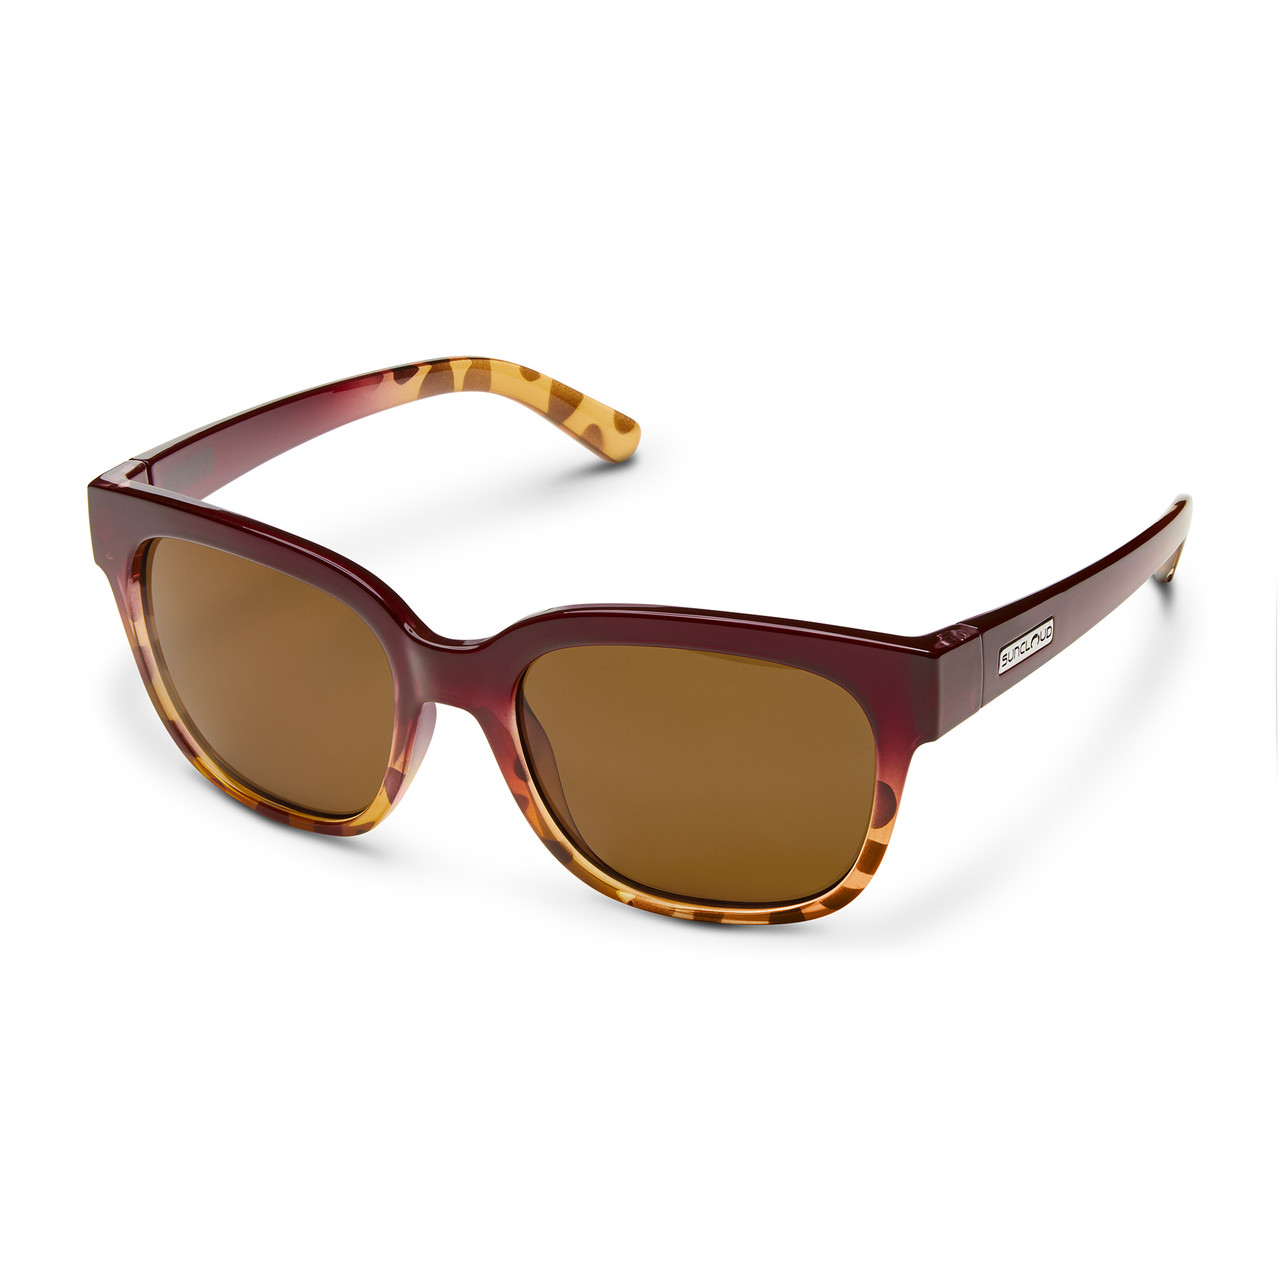 Profile View of Suncloud Affect Polarized Sunglasses Unisex Acetate Classic Retro in Raspberry Tortoise Fade & Brown